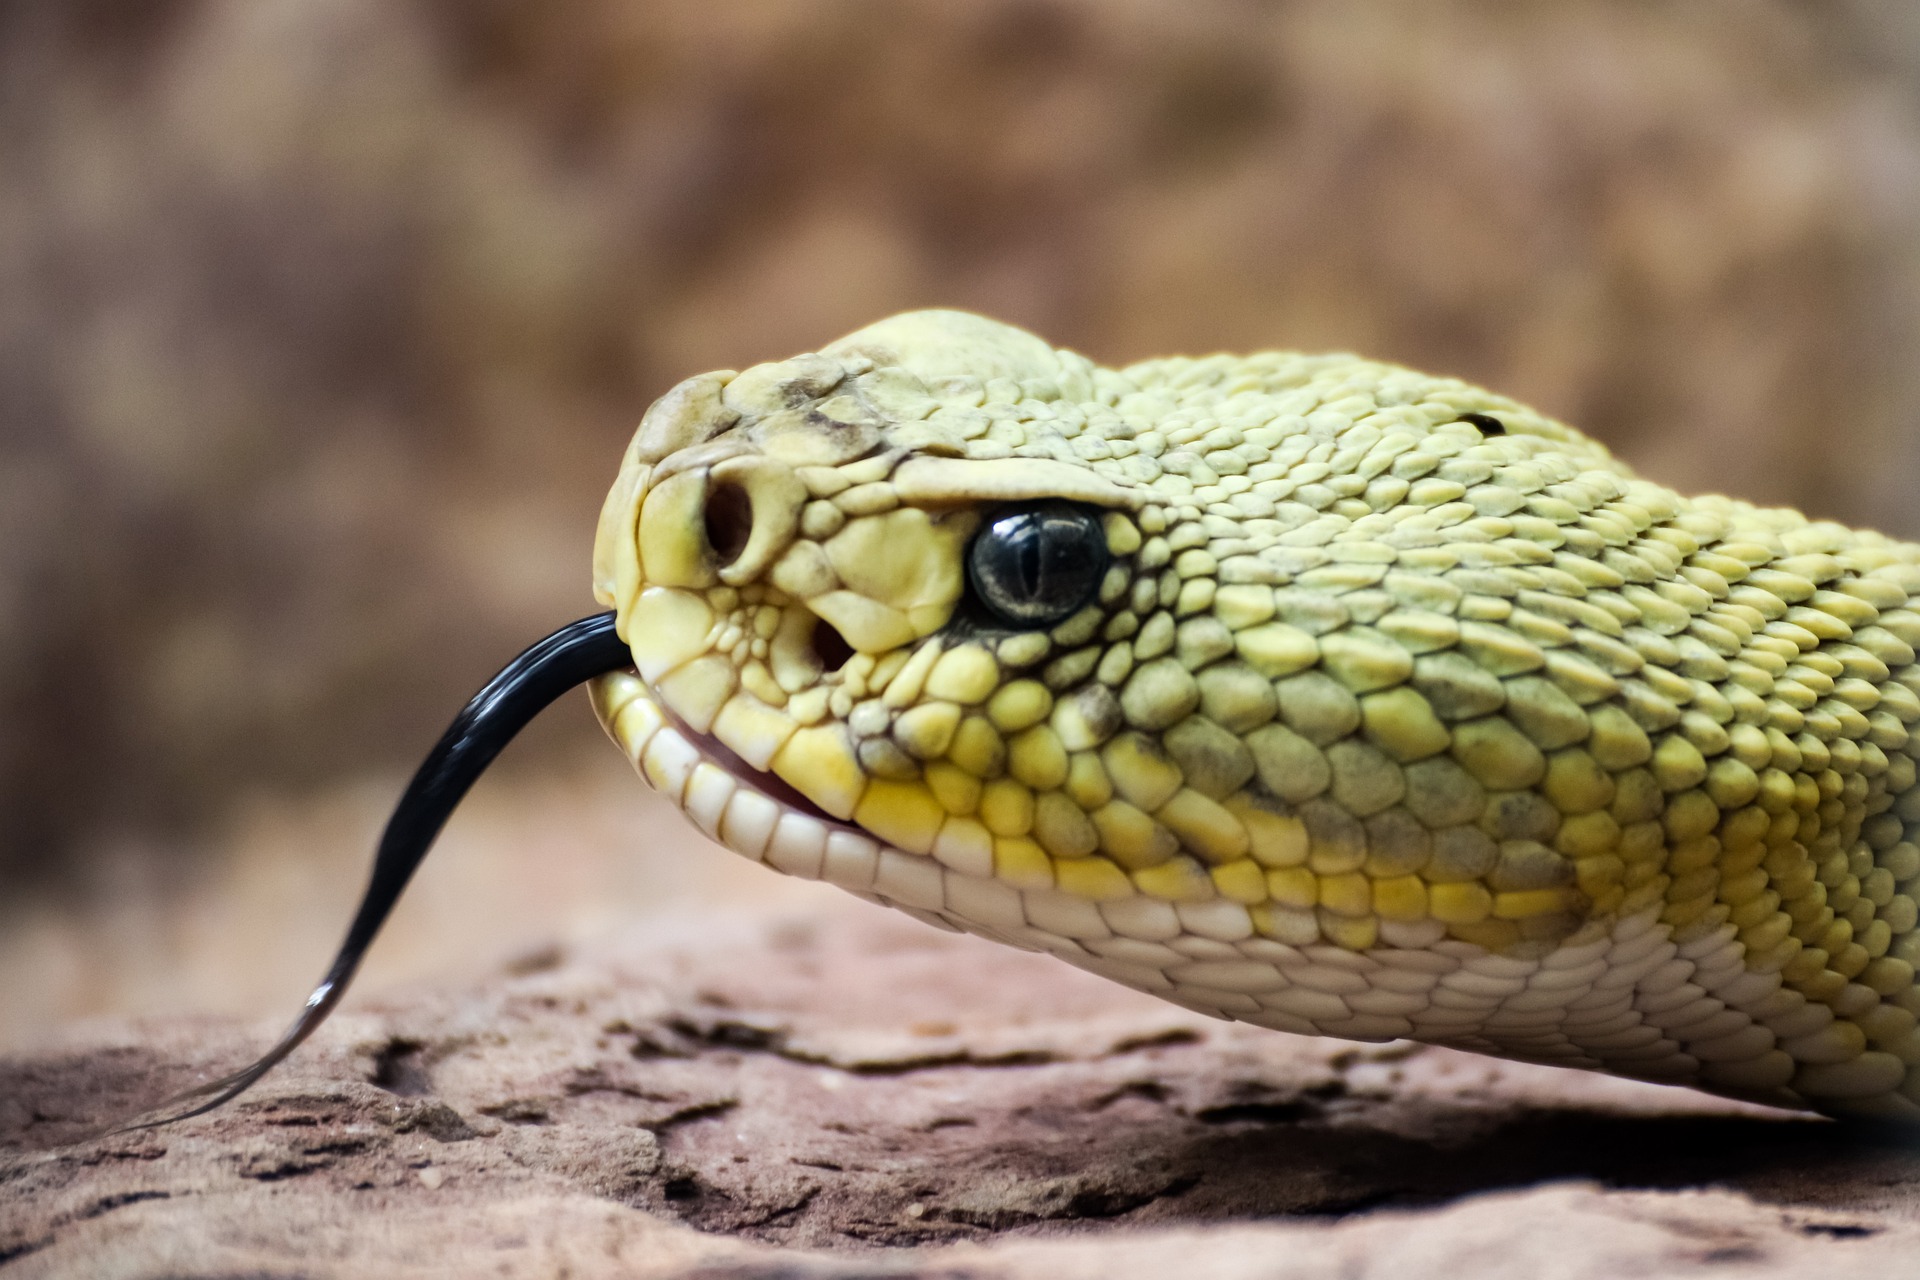 Snakes in Washington State